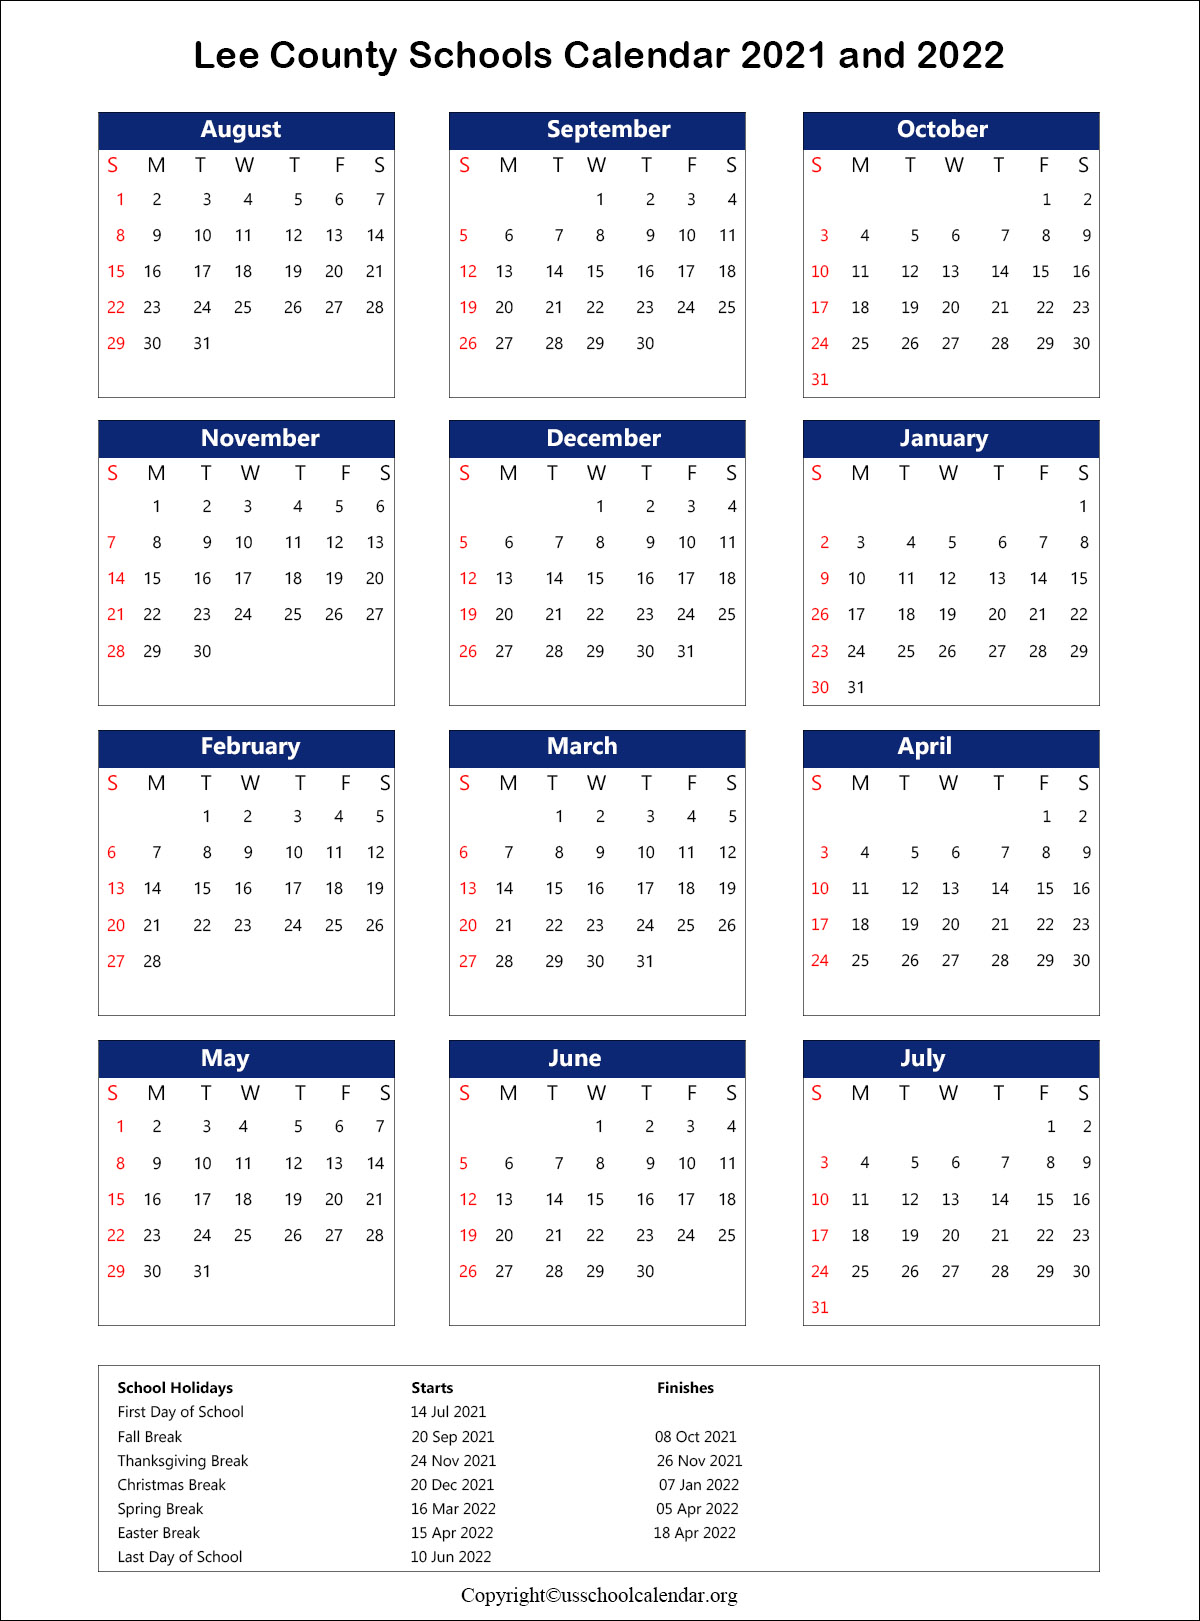 Lee County School Calendar with Holidays 2021-2022